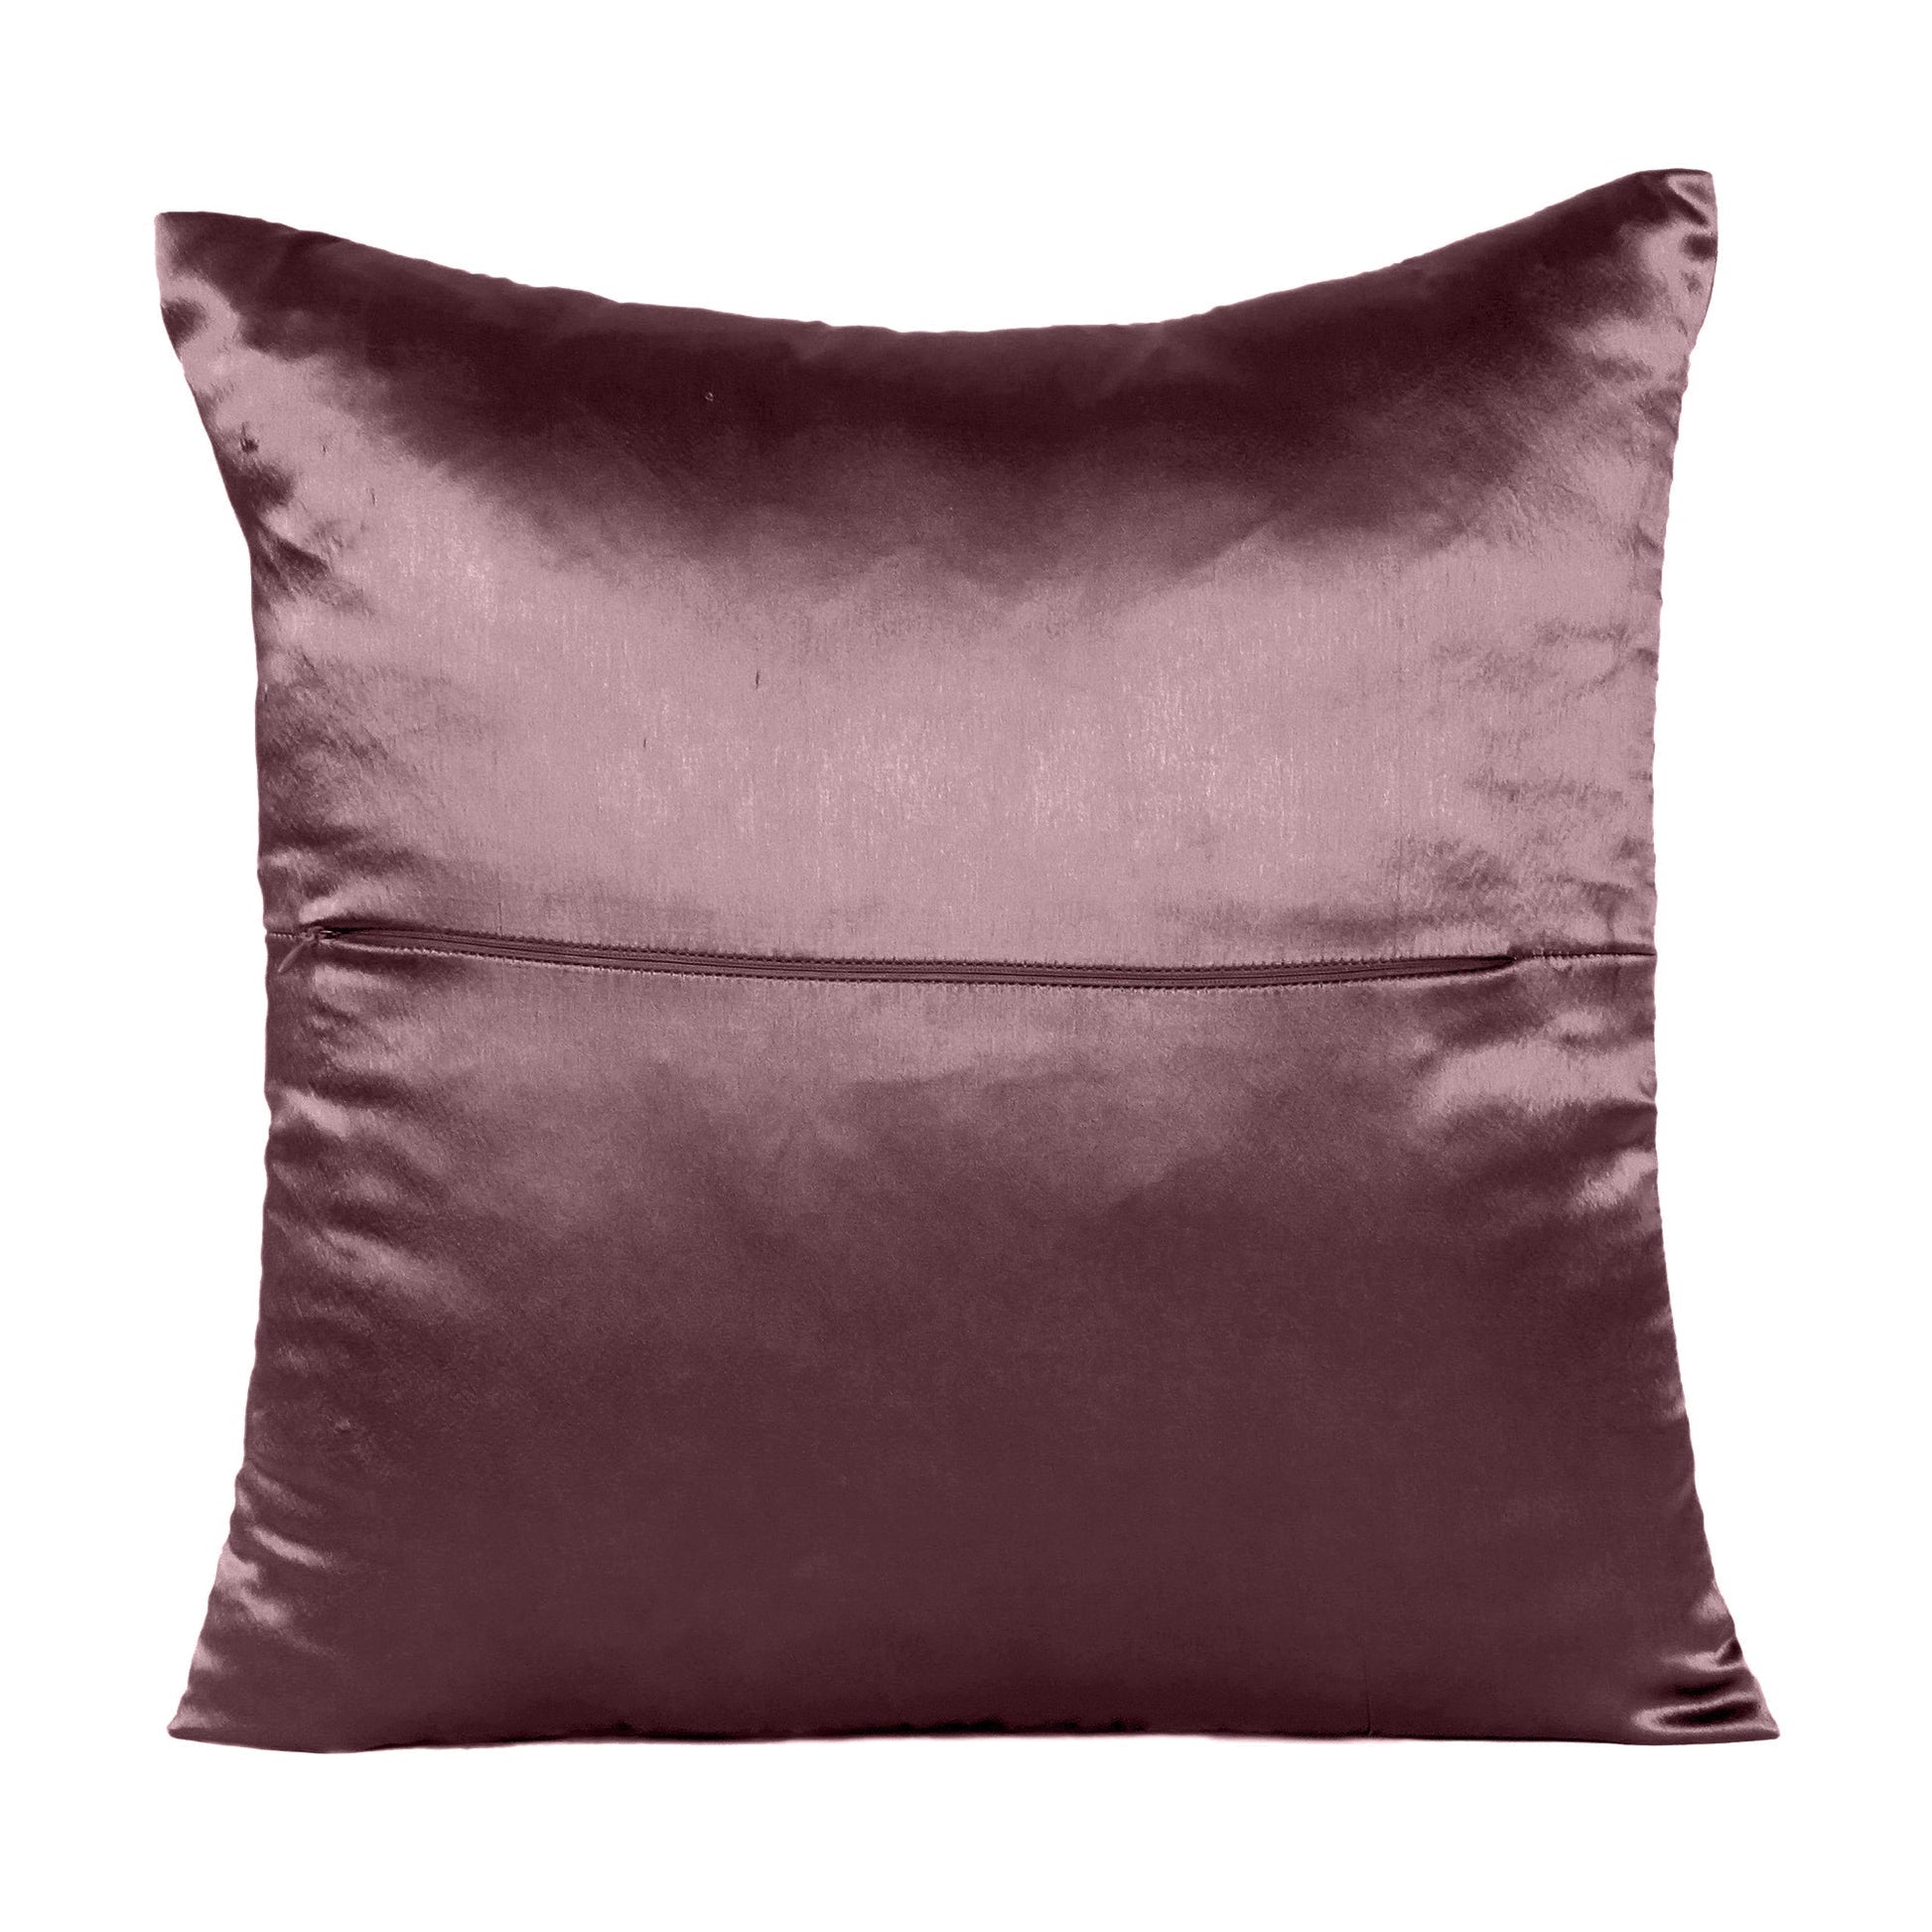 Luxury Soft Plain Satin Silk Cushion Cover in Set of 2 - Grape Wine